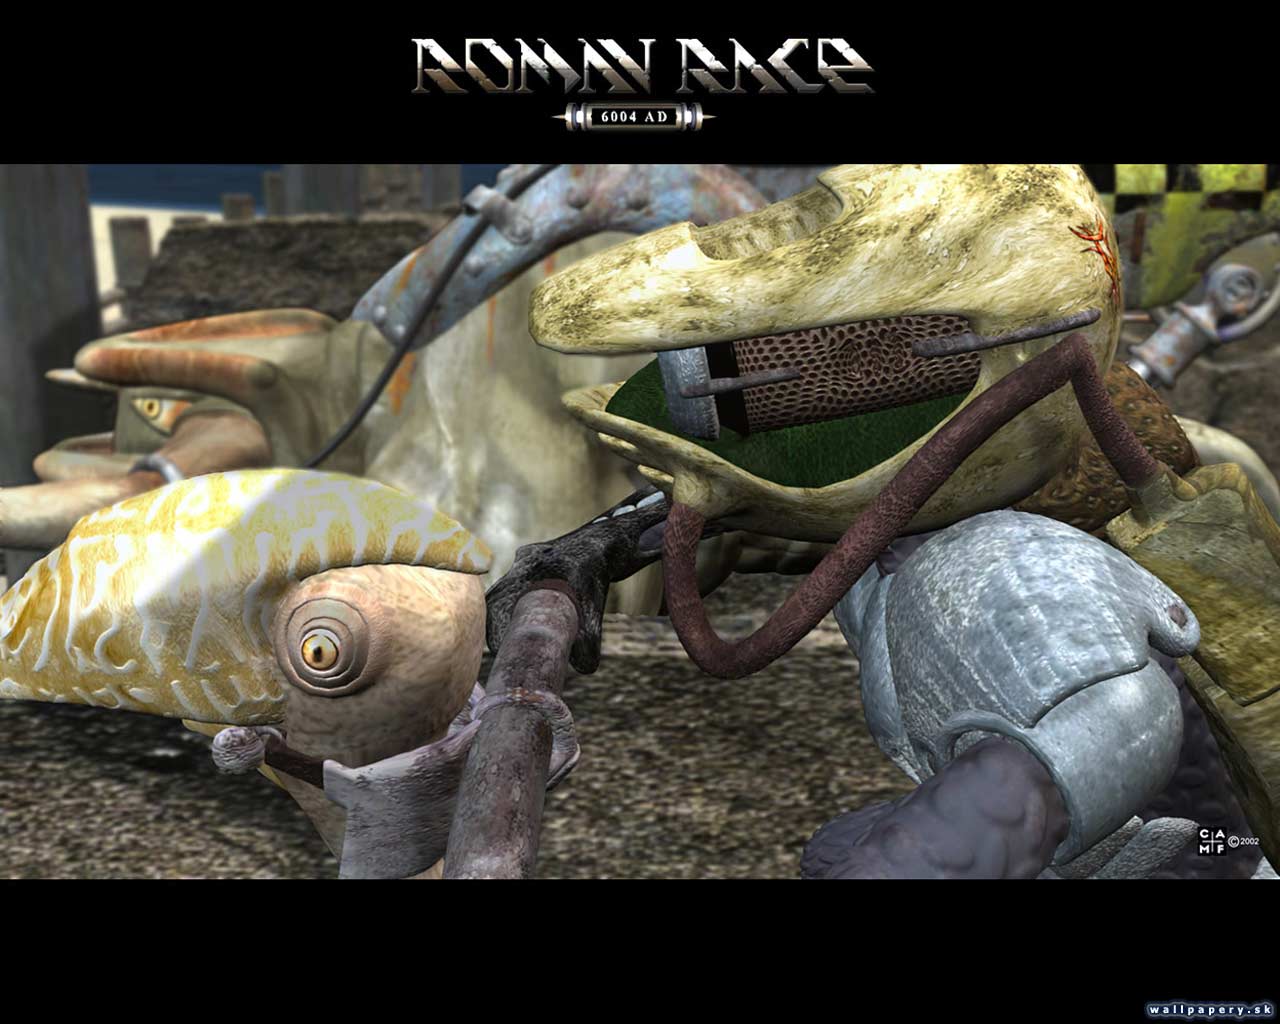 Roman Race 6004 AD - wallpaper 3